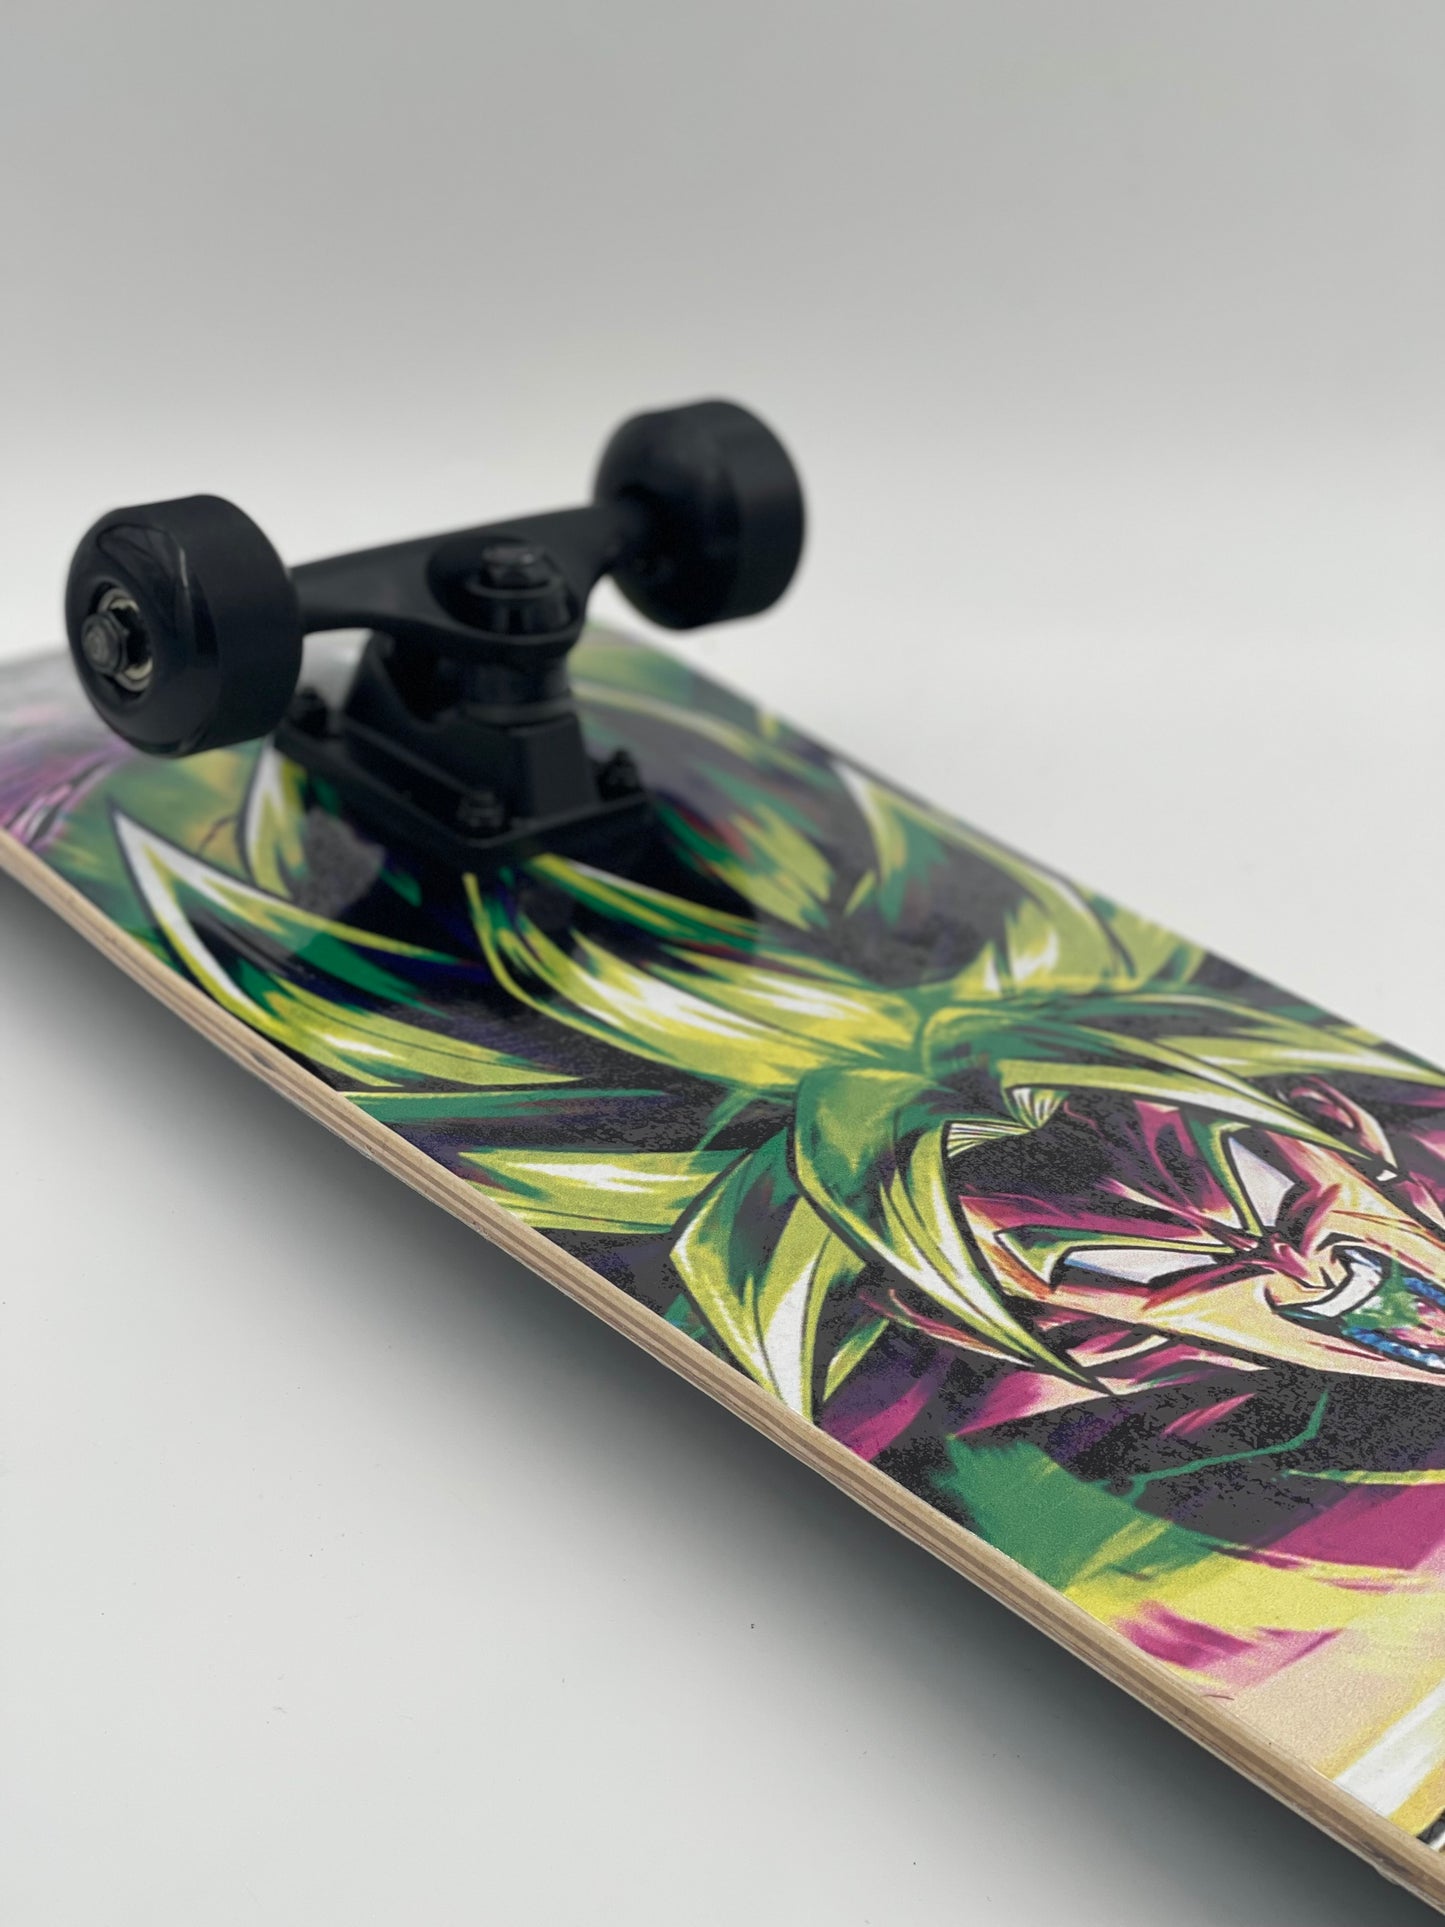 Dragon Ball Z Broly Skateboard